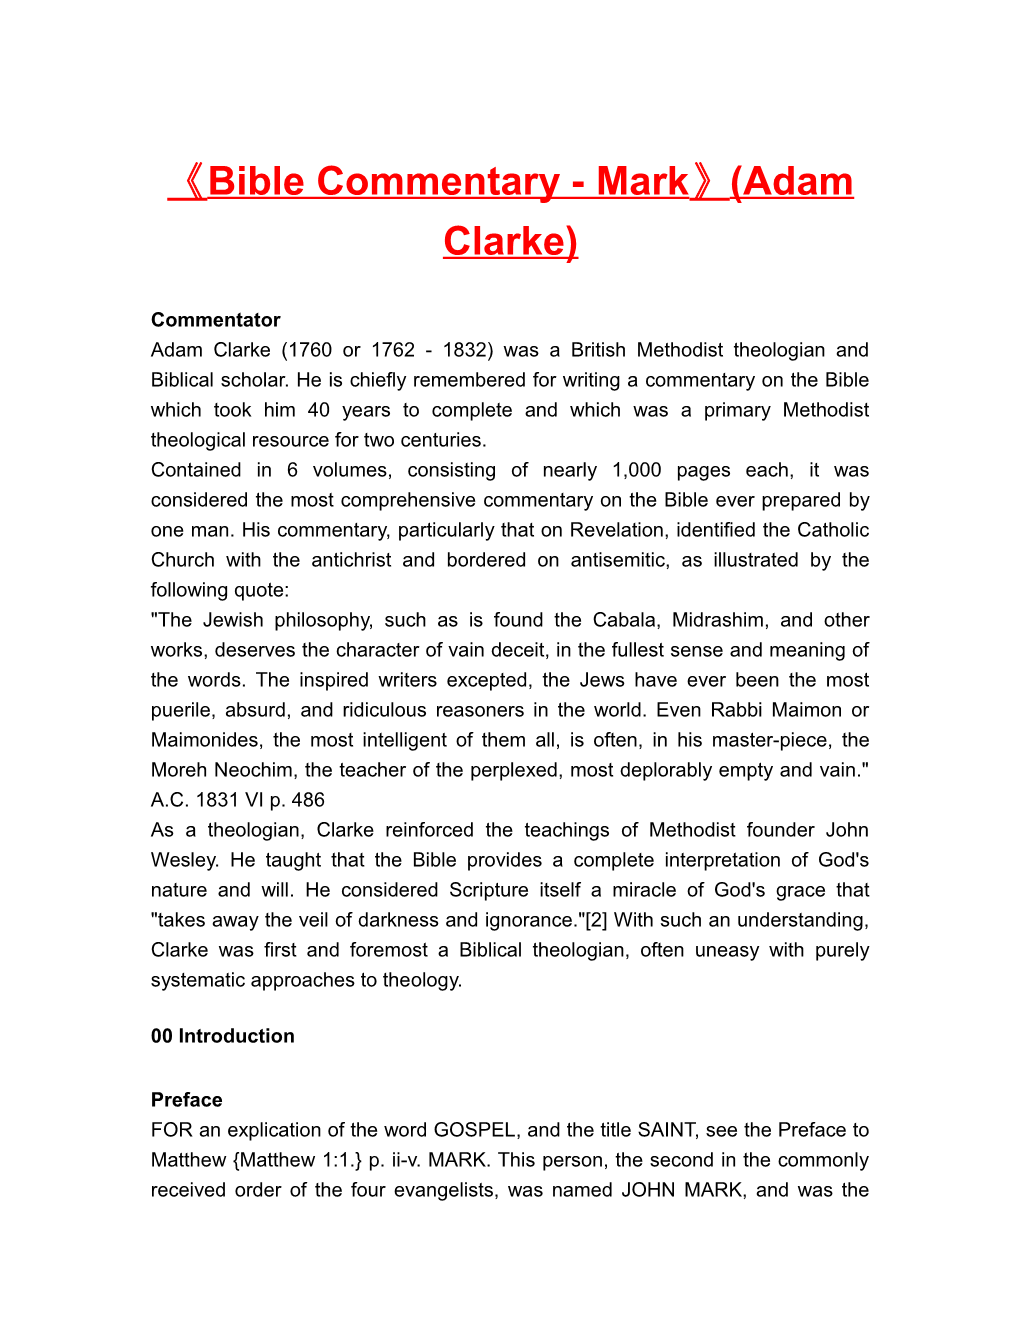 Bible Commentary - Mark (Adam Clarke)